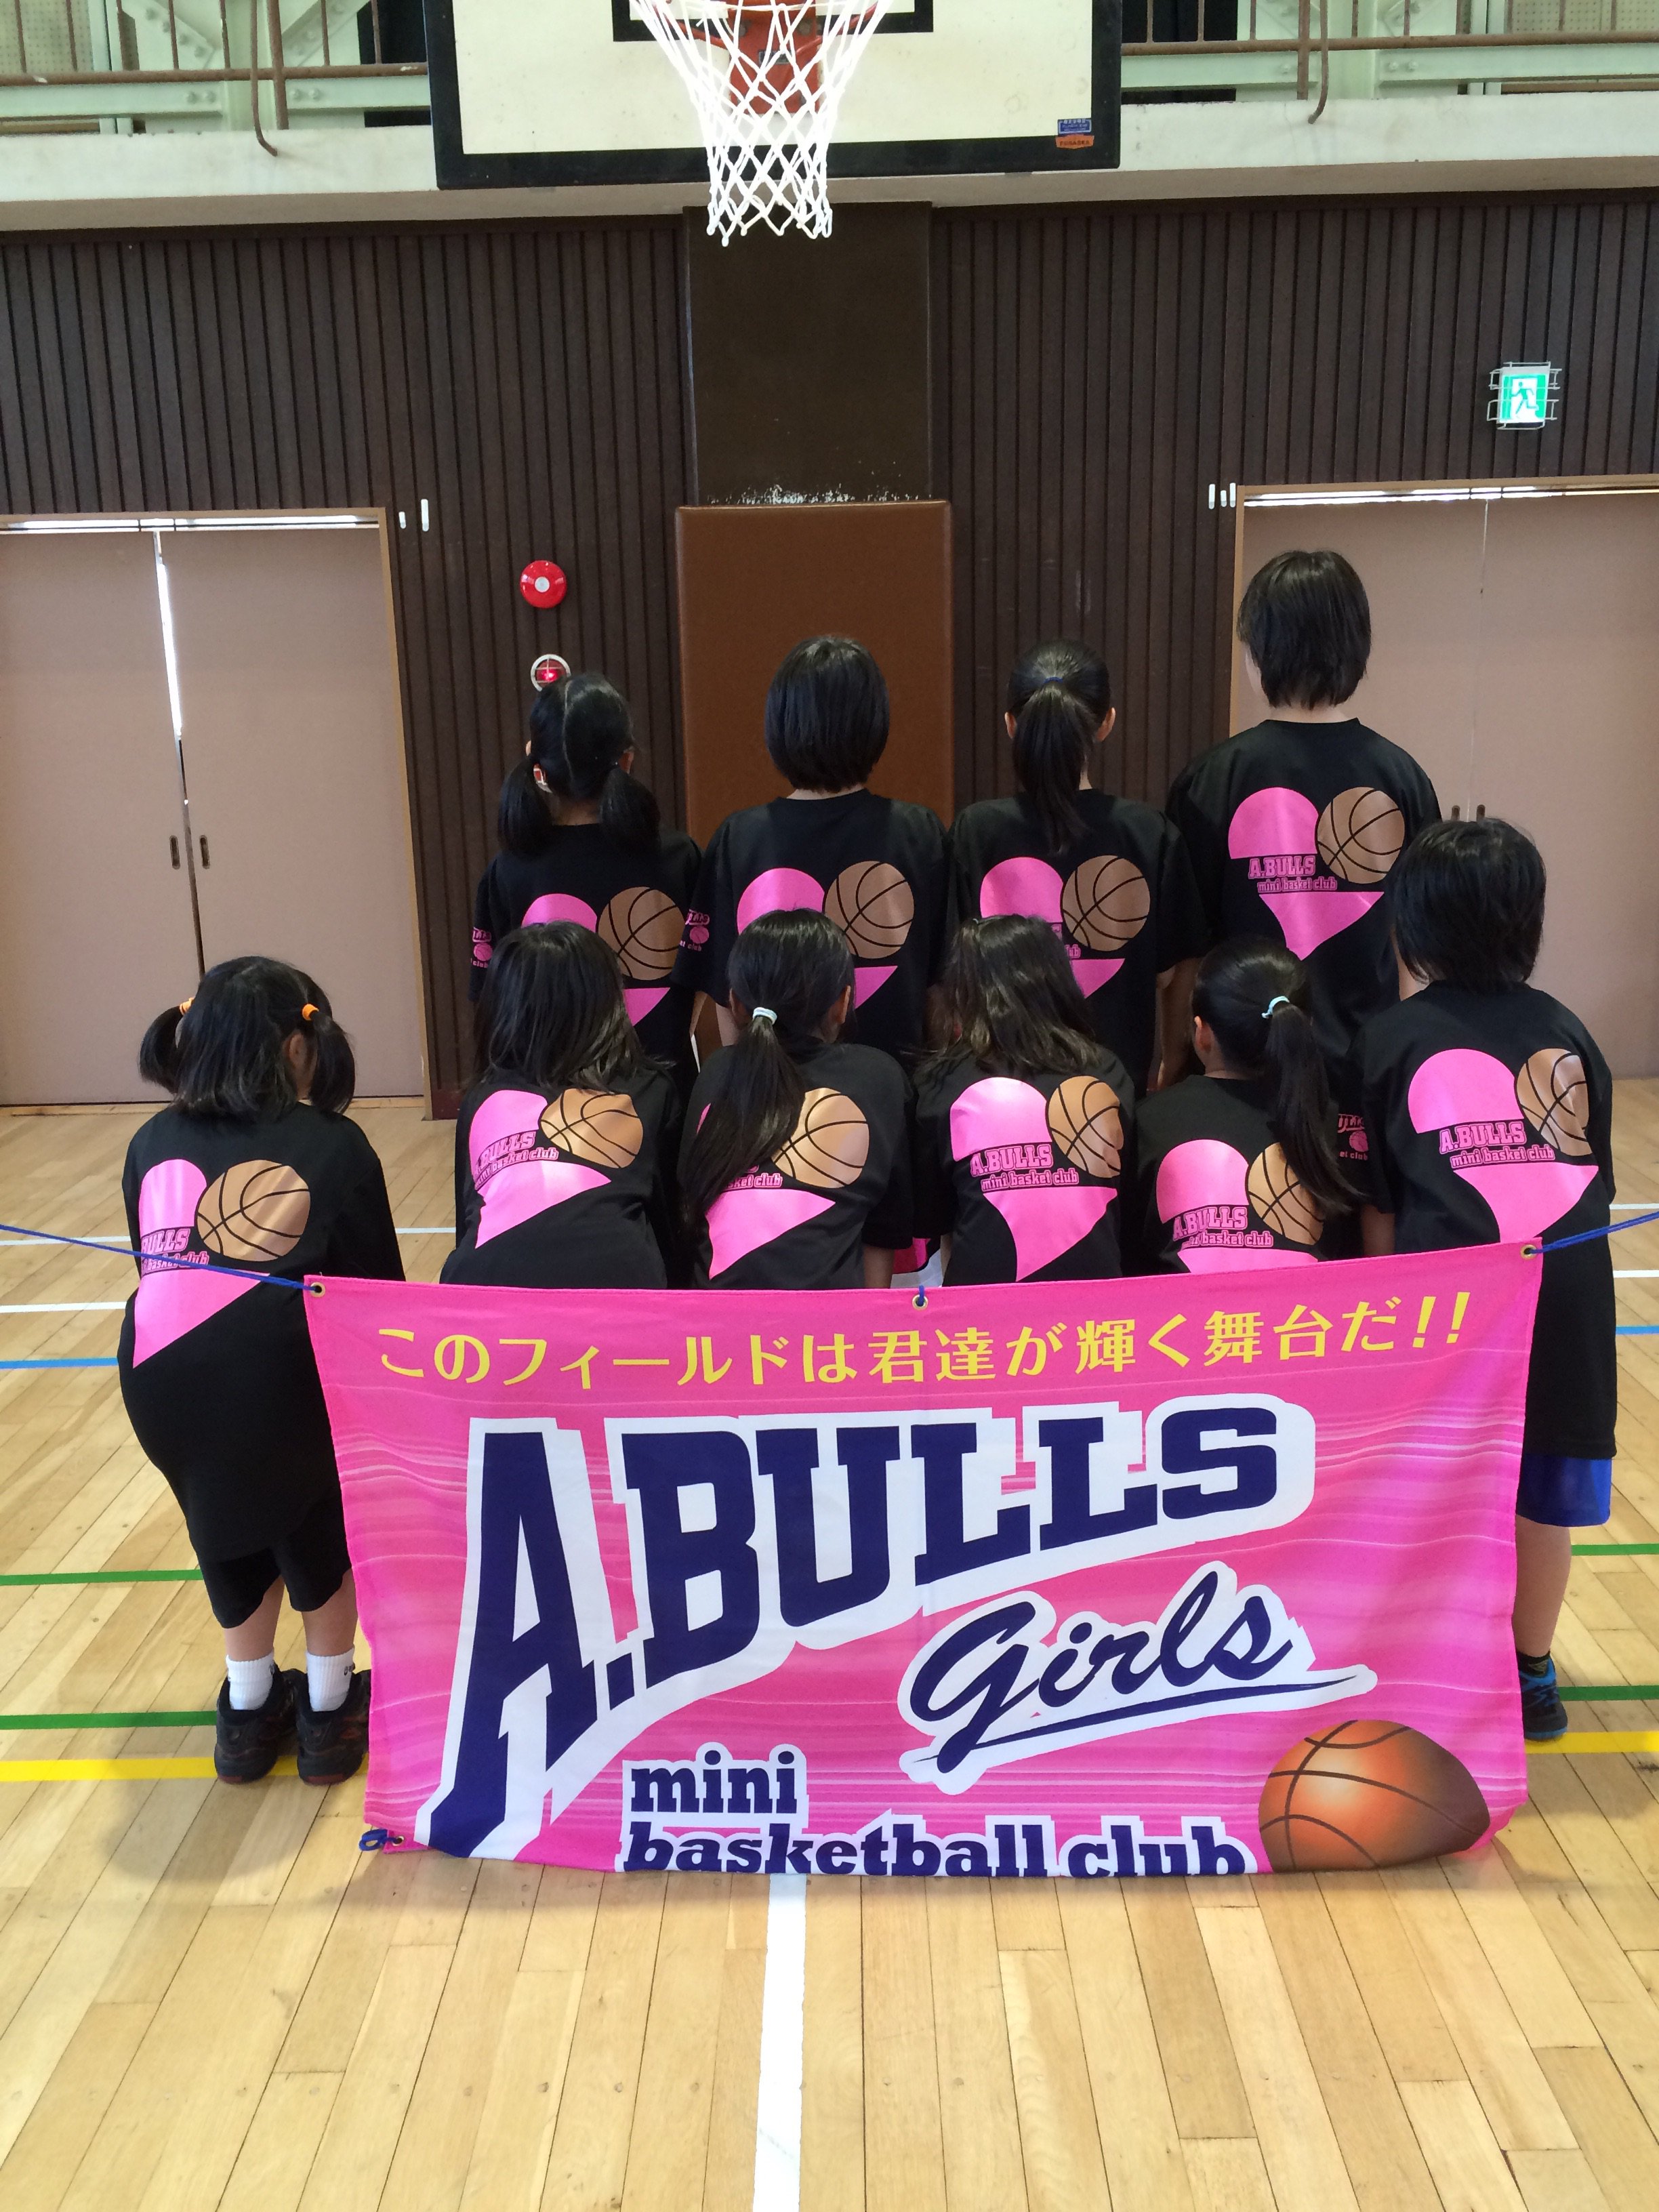 O Xrhsths ラブラボ オリジナルtシャツ タオル 公式 Sto Twitter 東京都 あきる野ブルズ女子の皆さまよりｔシャツのご注文を頂きました ハートのデザインをバスケットボールとチーム名とで組み合わせて1つのデザインを作り上げた かっこいいデザインです ご注文